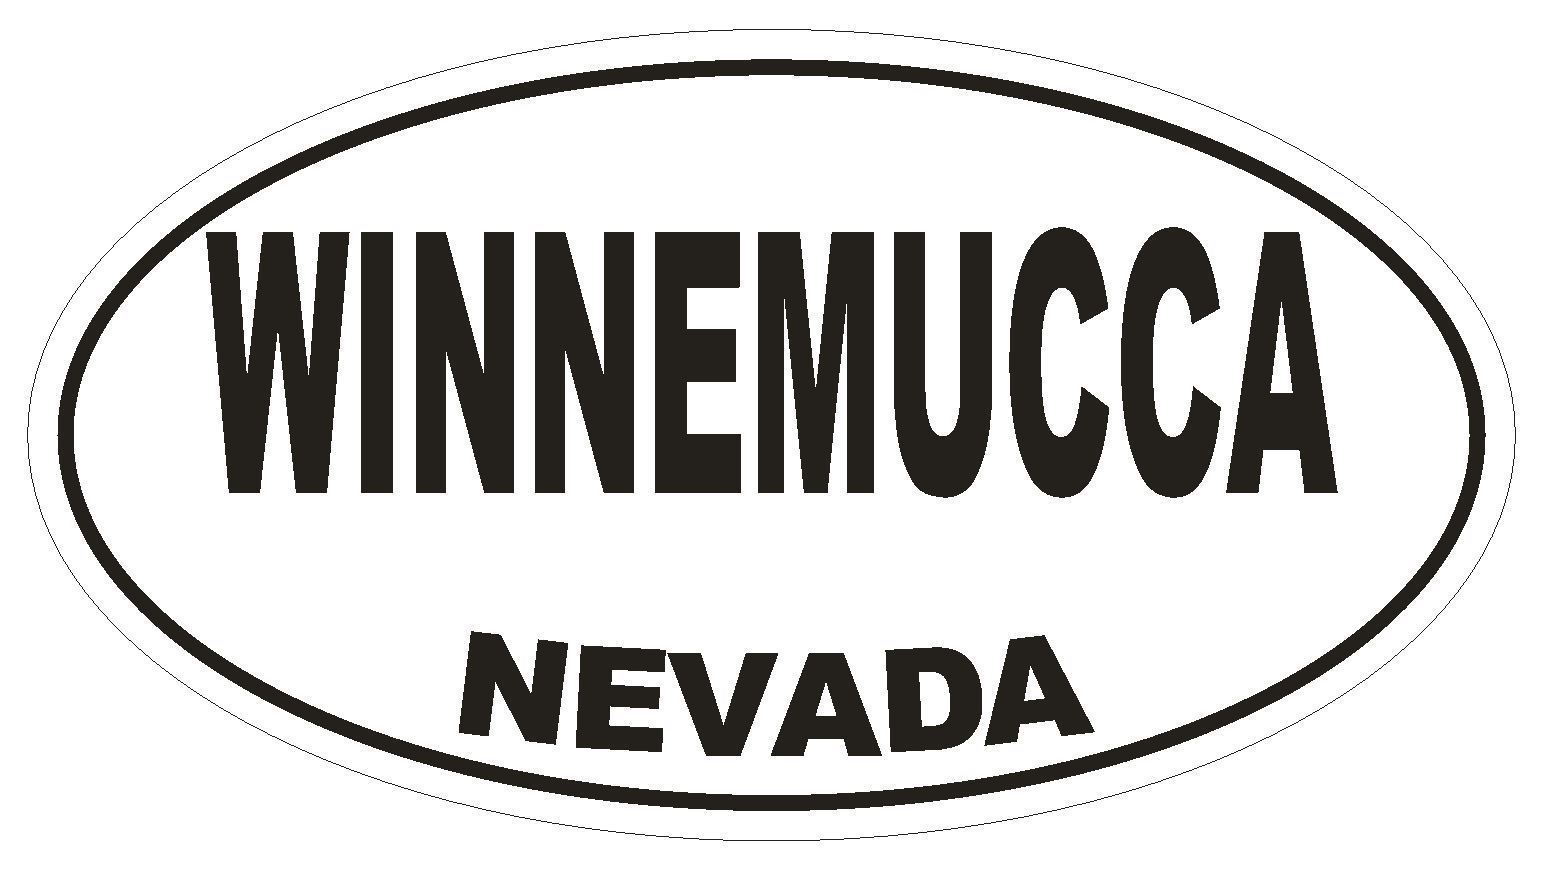 Winnemucca Nevada Oval Bumper Sticker or Helmet Sticker D2893 Euro Oval - $1.39 - $75.00